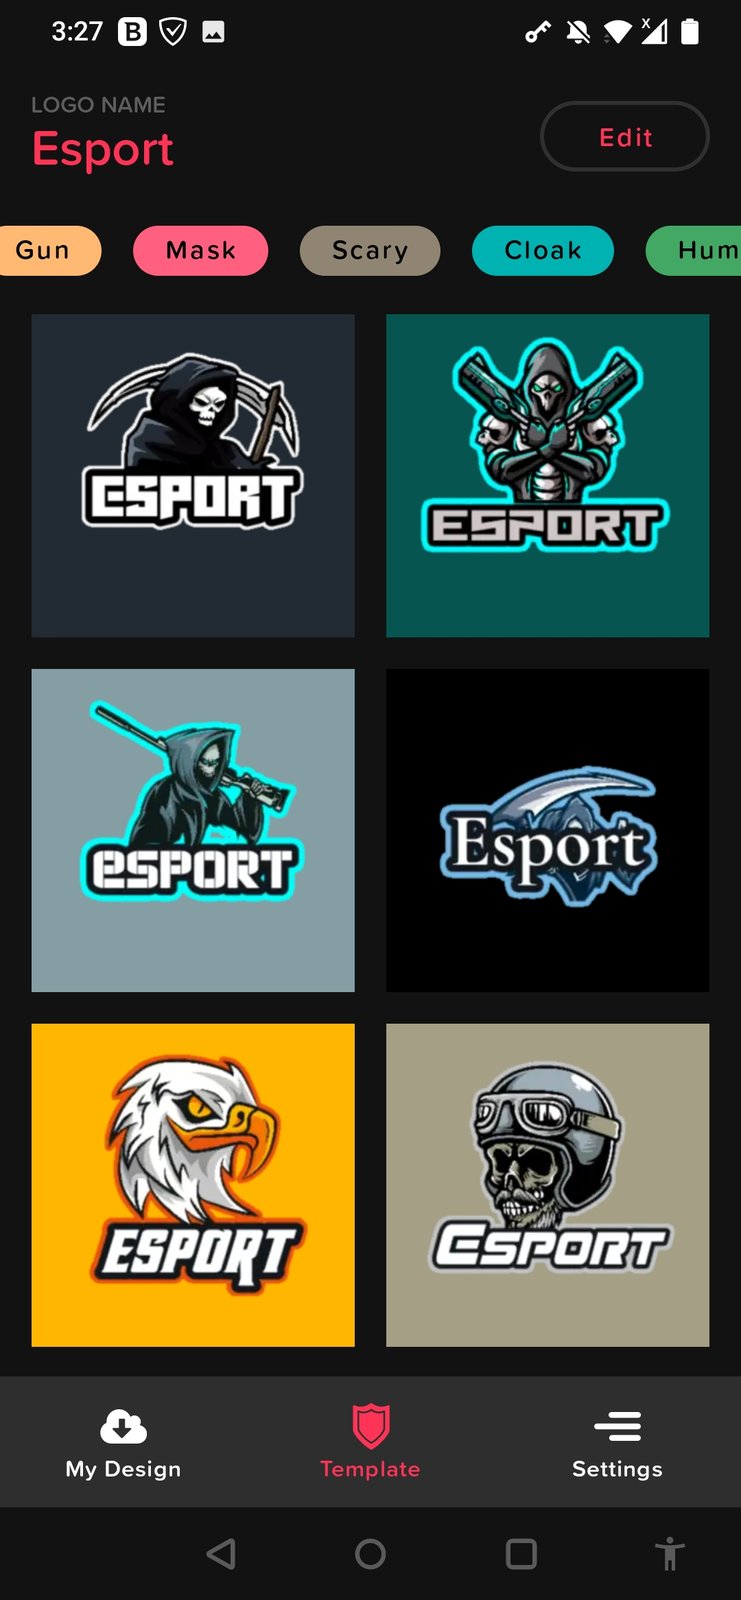 Esports Gaming Logo Maker app 2.1.3 Free Download